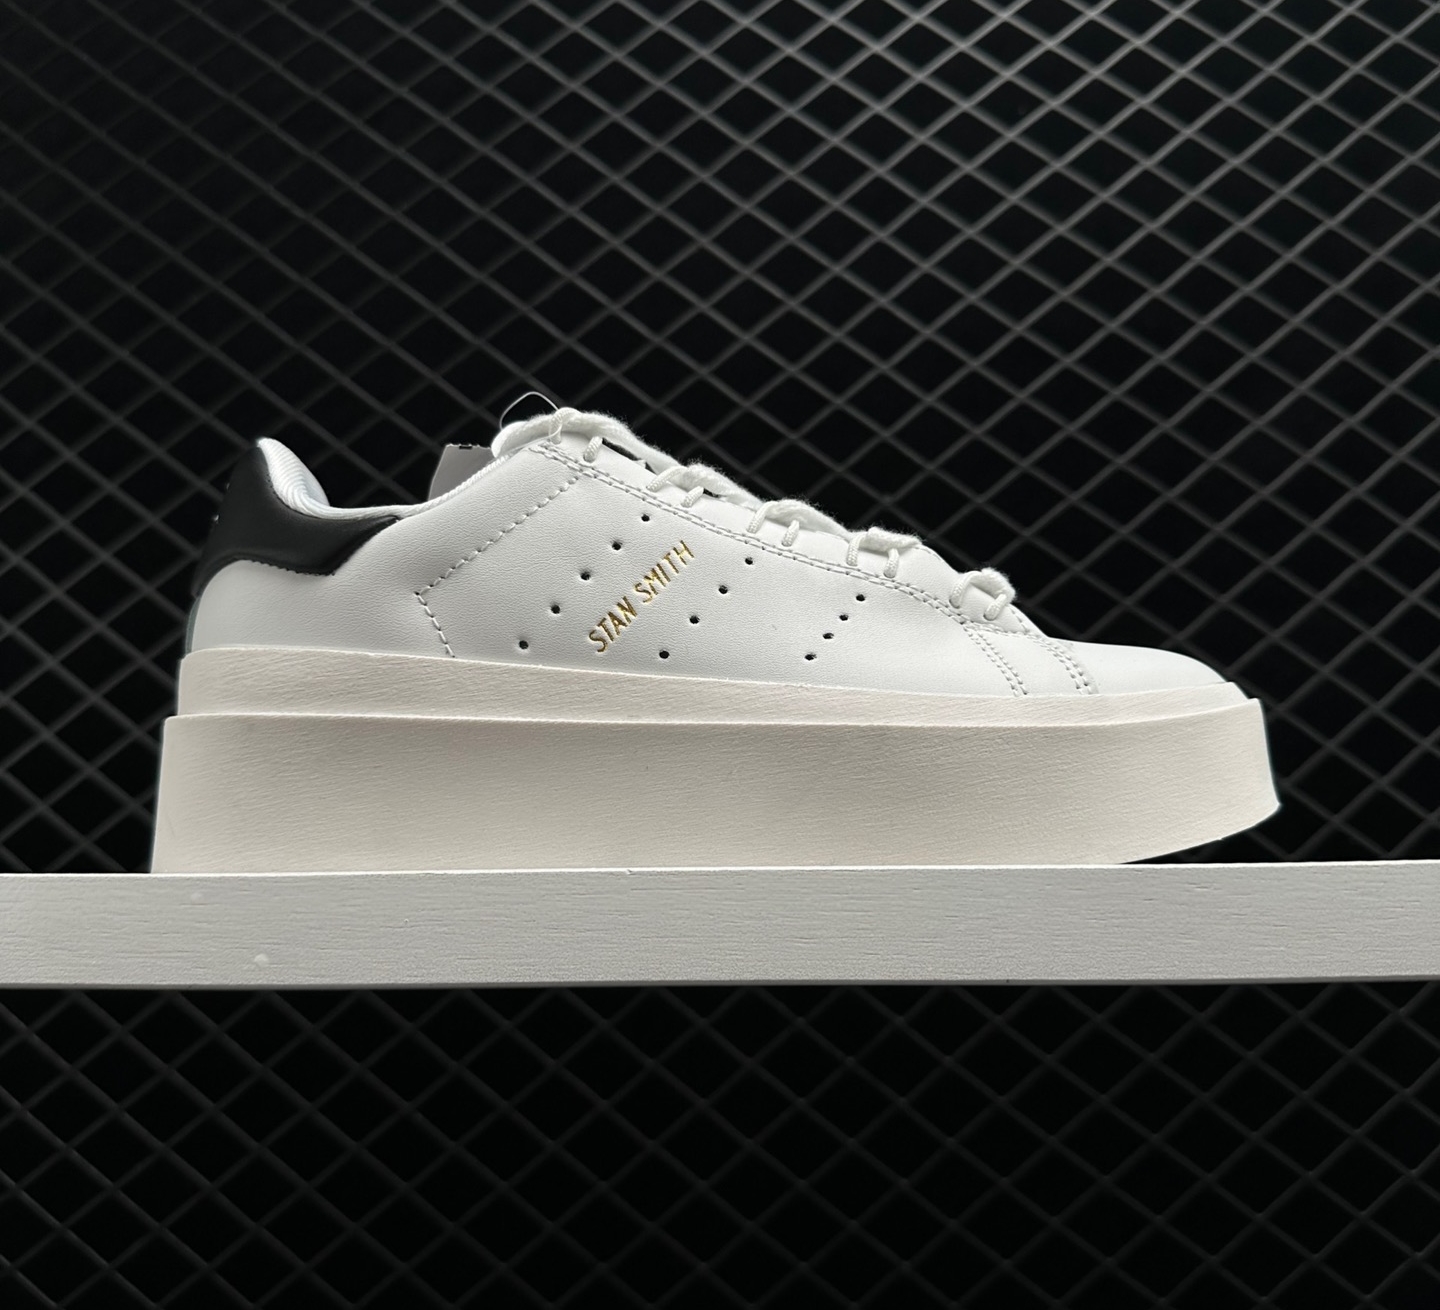 Adidas Stan Smith Bonega White Black: Classic Style with a Modern Twist